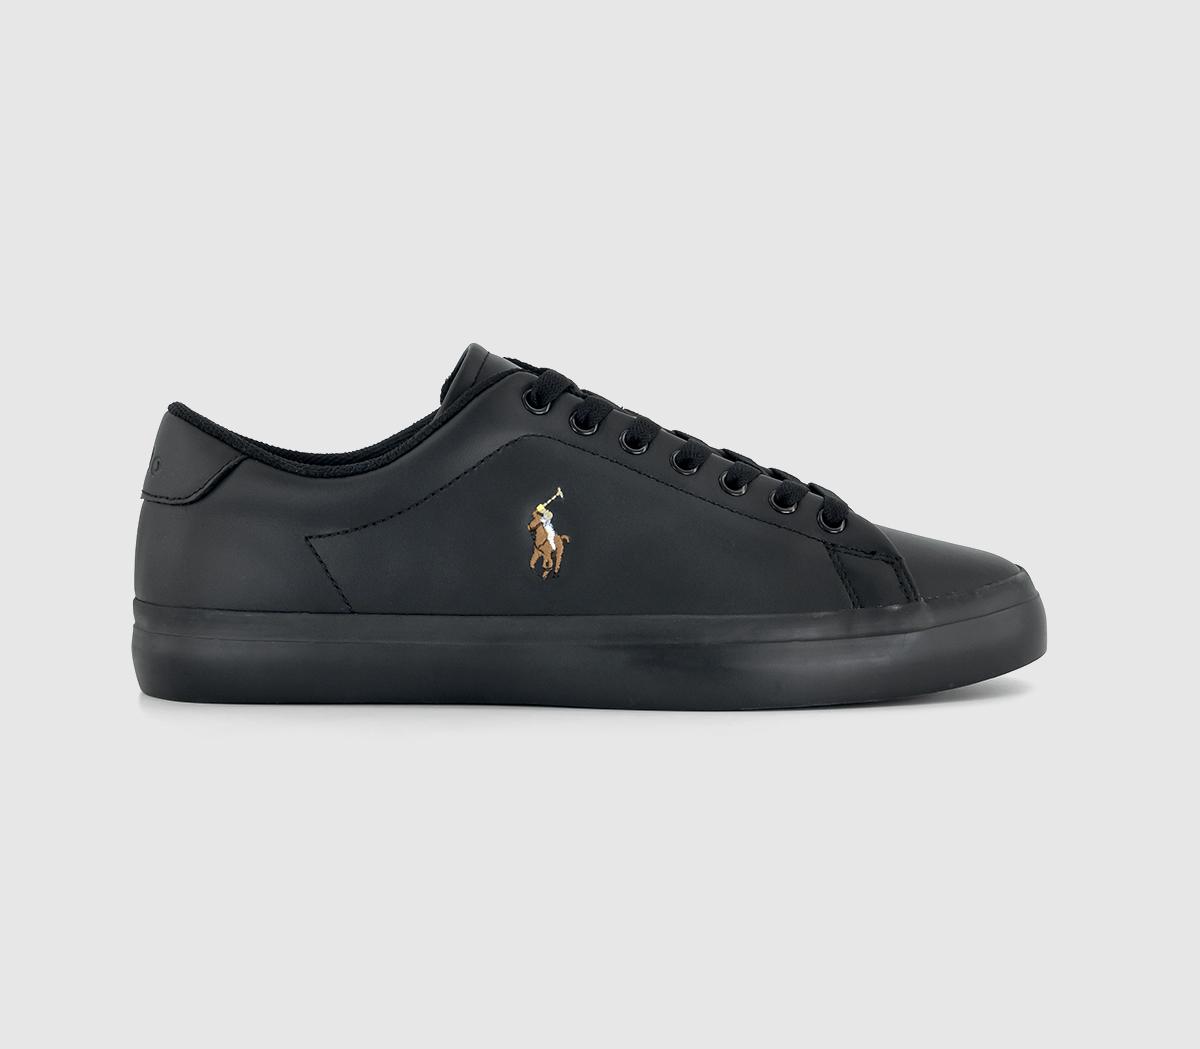 Polo Ralph LaurenLongwood SneakersBlack Black Multi Pp